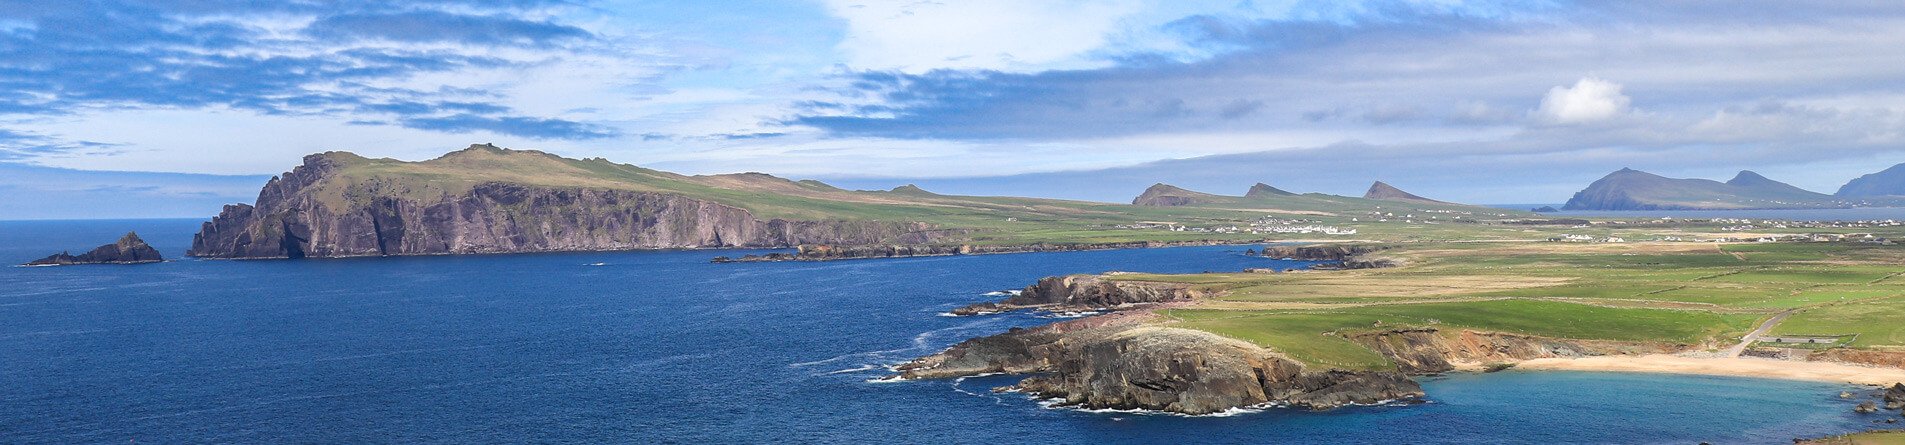 Scenic landscape on Dingle Peninsula in Kerry, Ireland